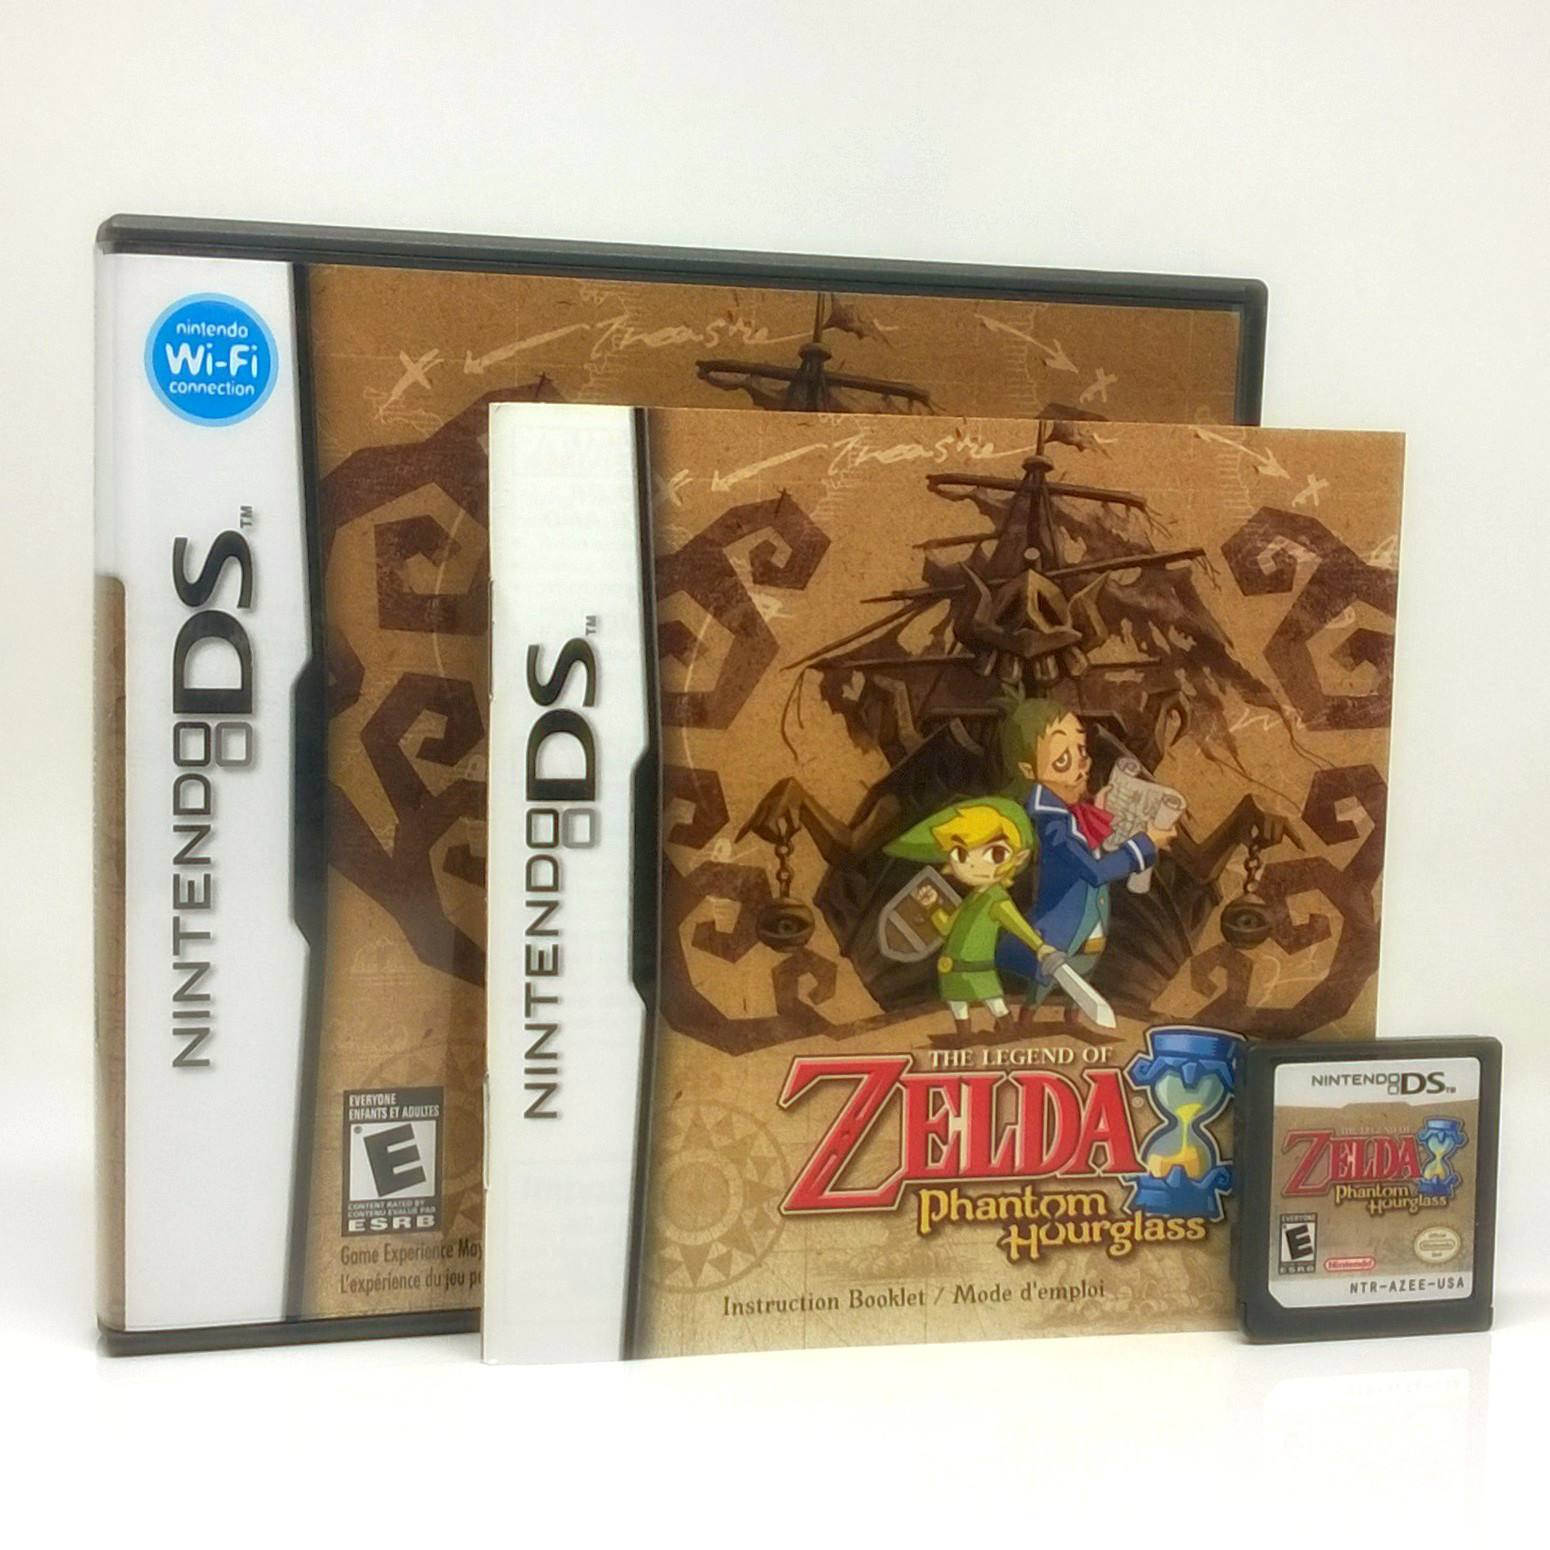 The Legend of Zelda: Phantom Hourglass Nintendo DS Game